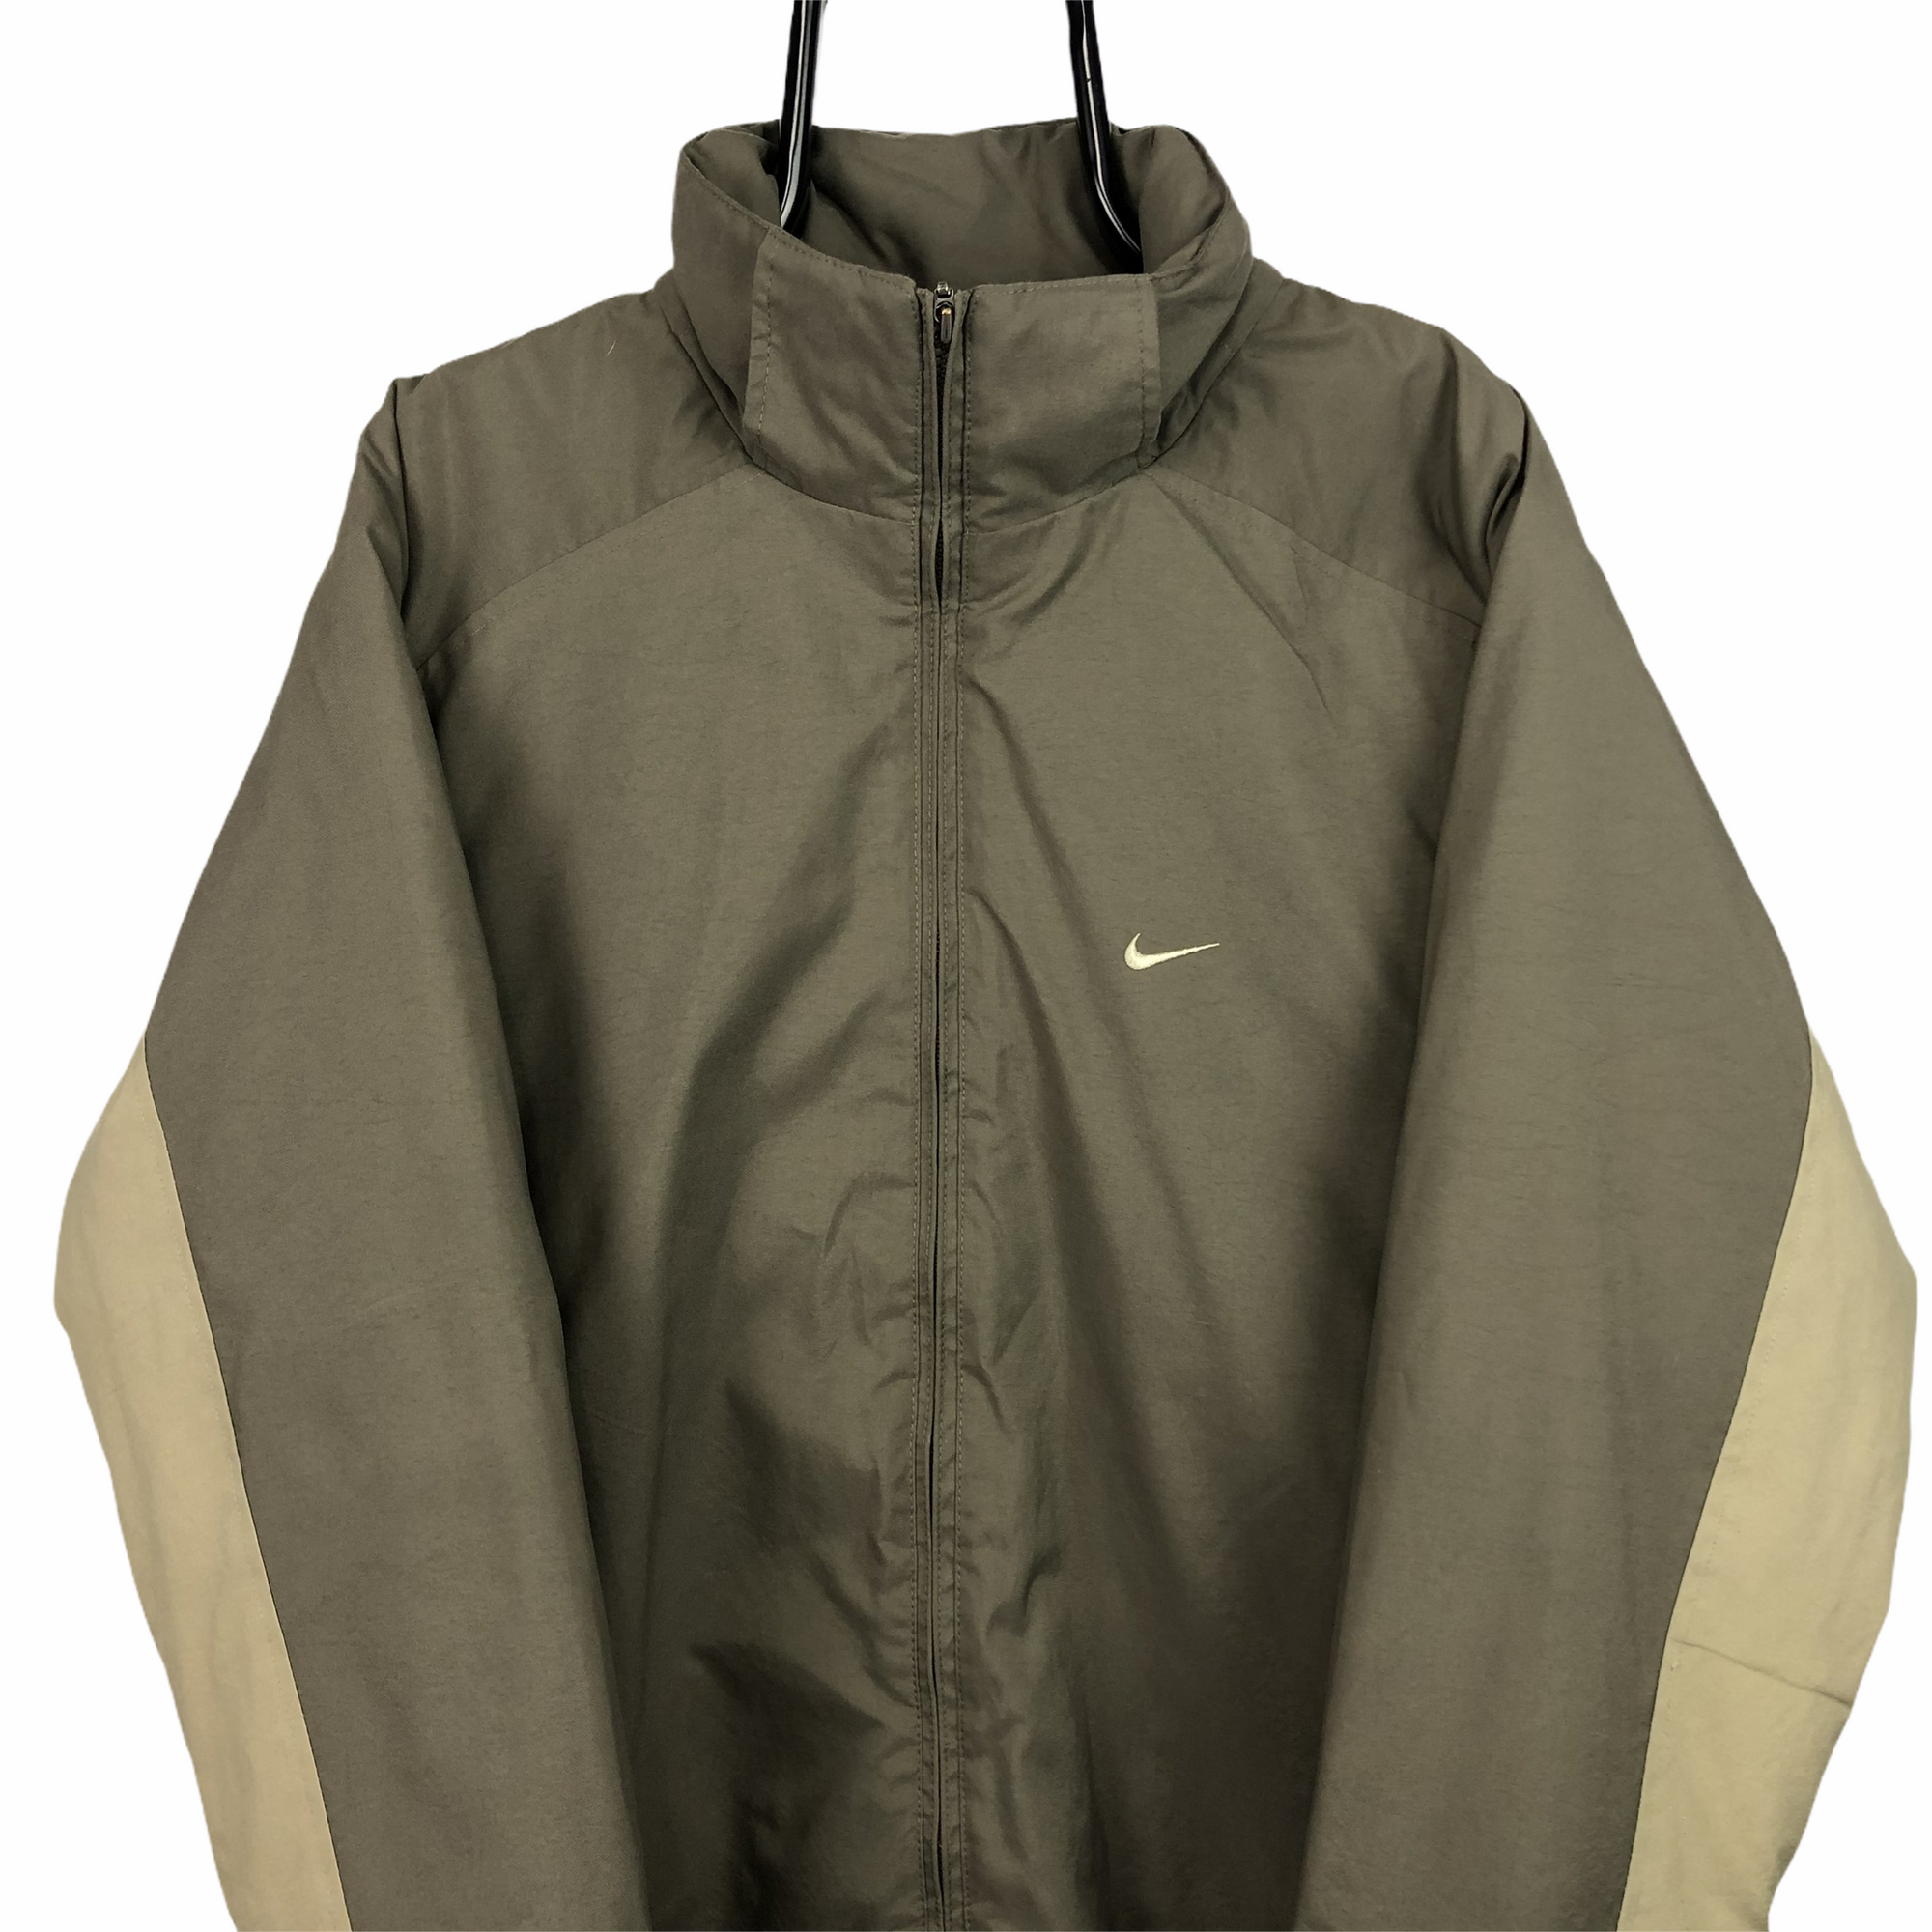 Vintage 00s Nike Embroidered Big Swoosh Puffer Jacket in Brown/Beige - Men's Large/Women's XL